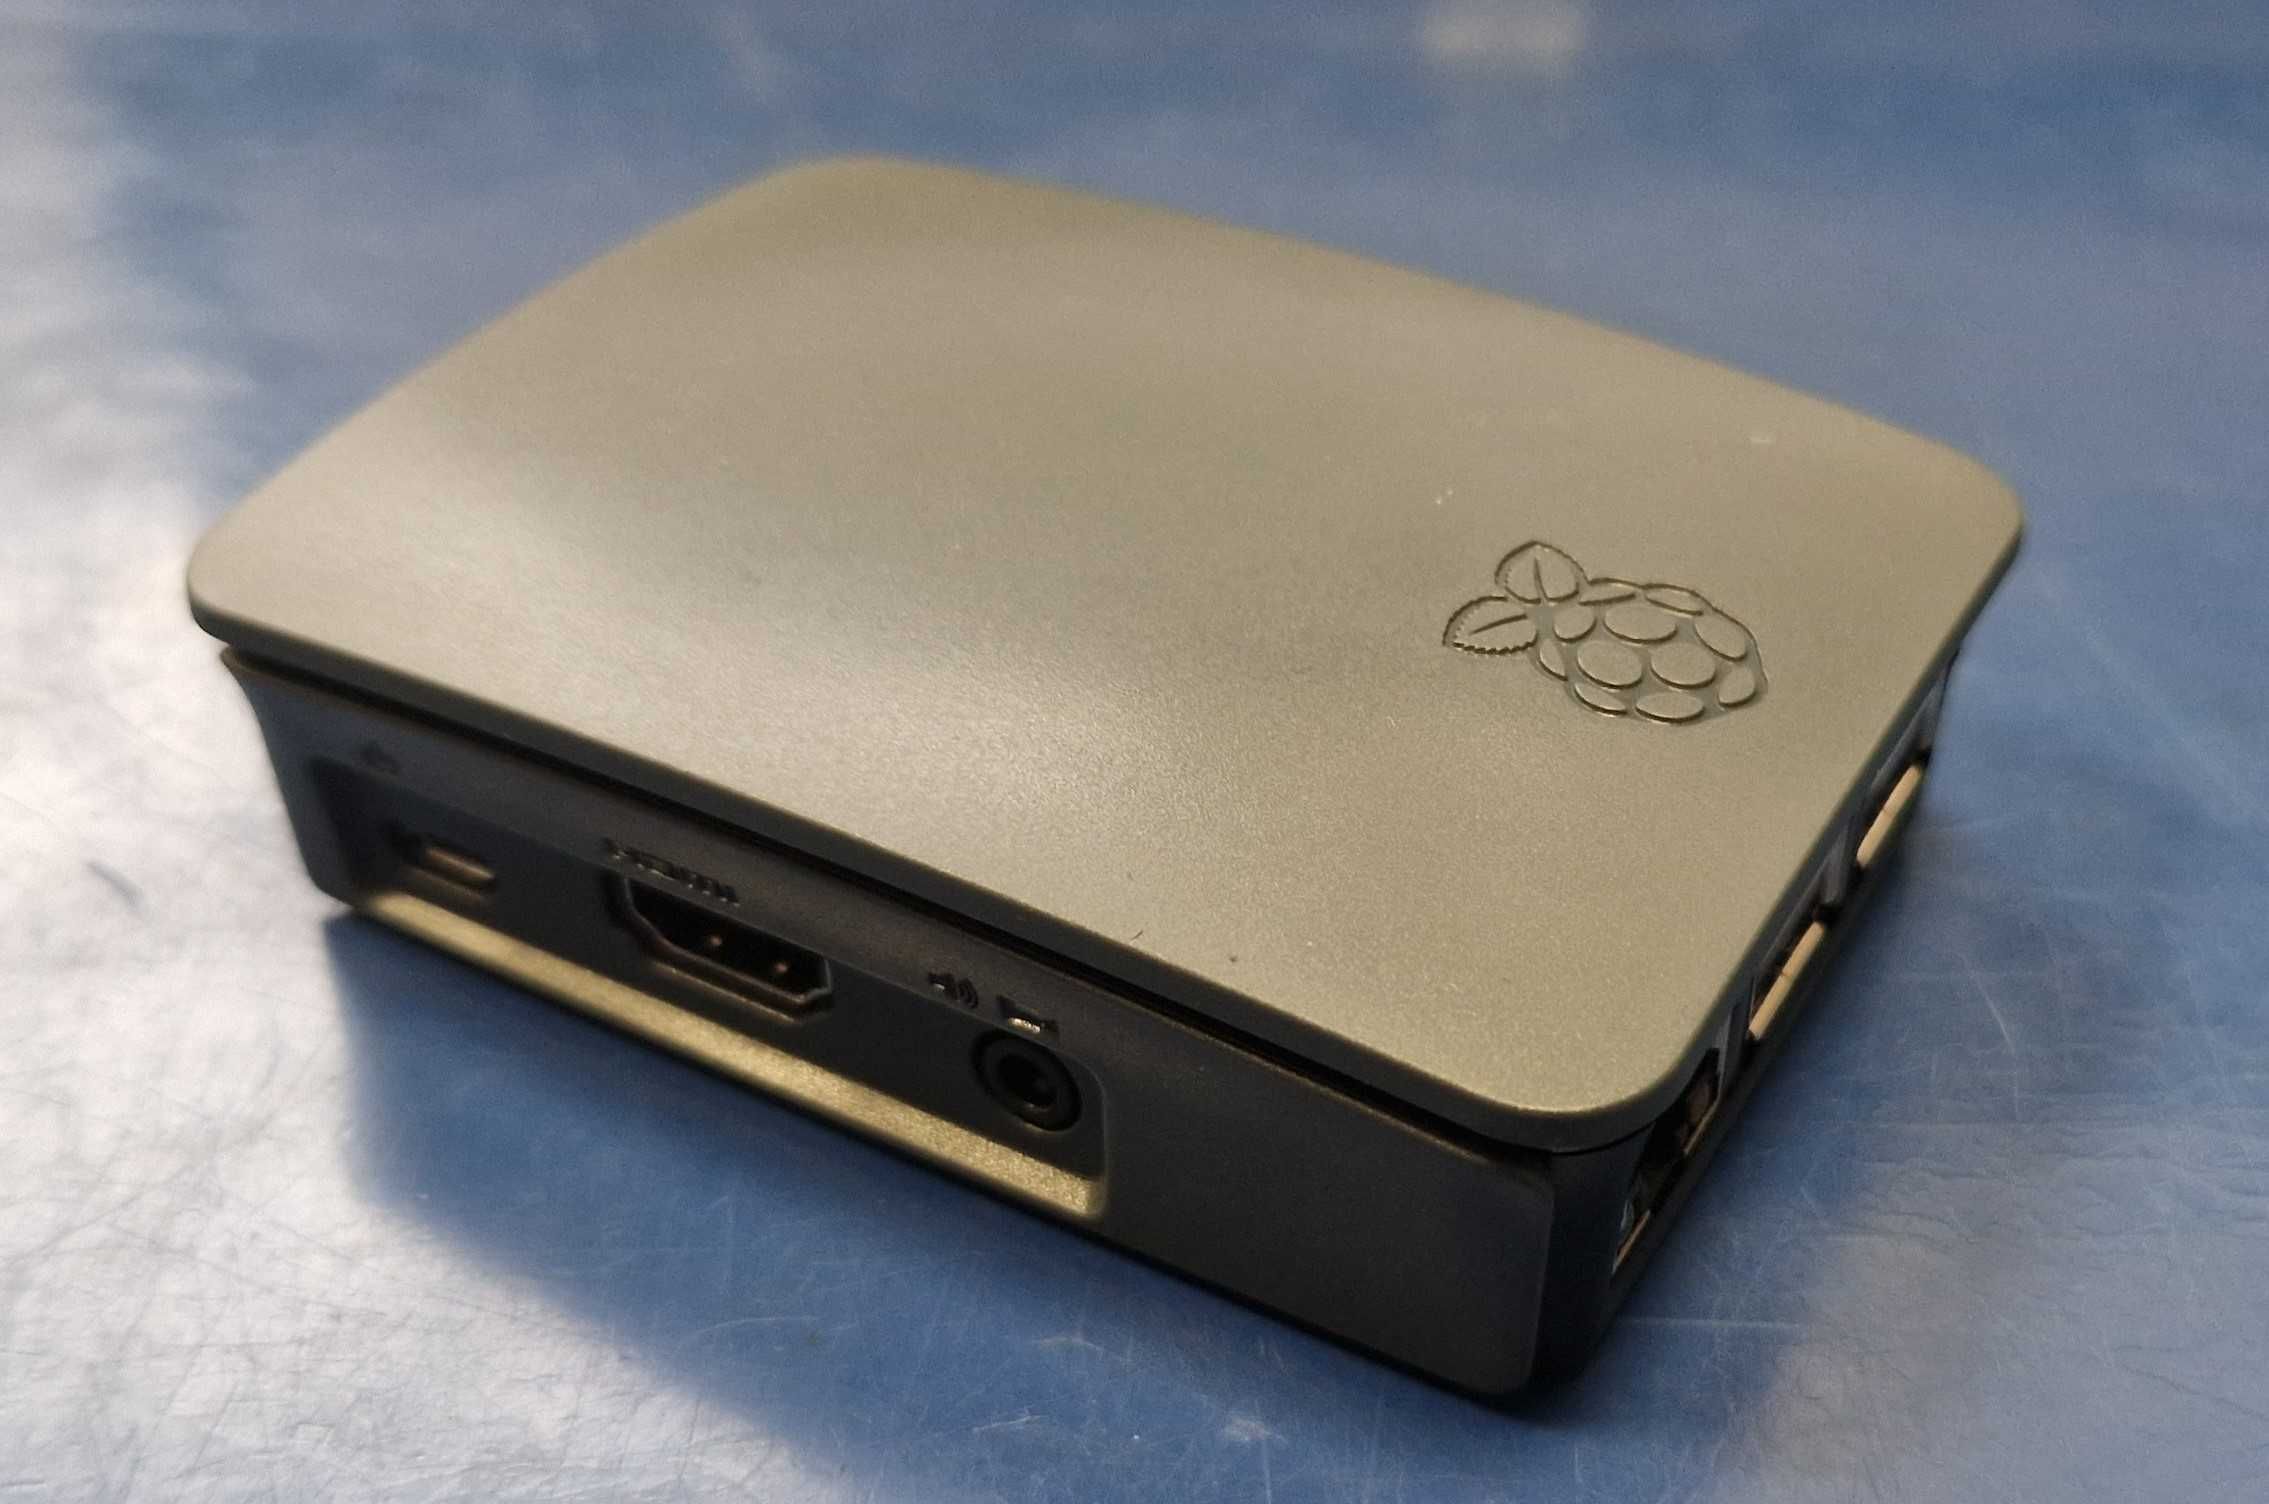 Raspberry Pi 3 model B+ WiFi DualBand Bluetooth 1GB RAM 1,4GHz